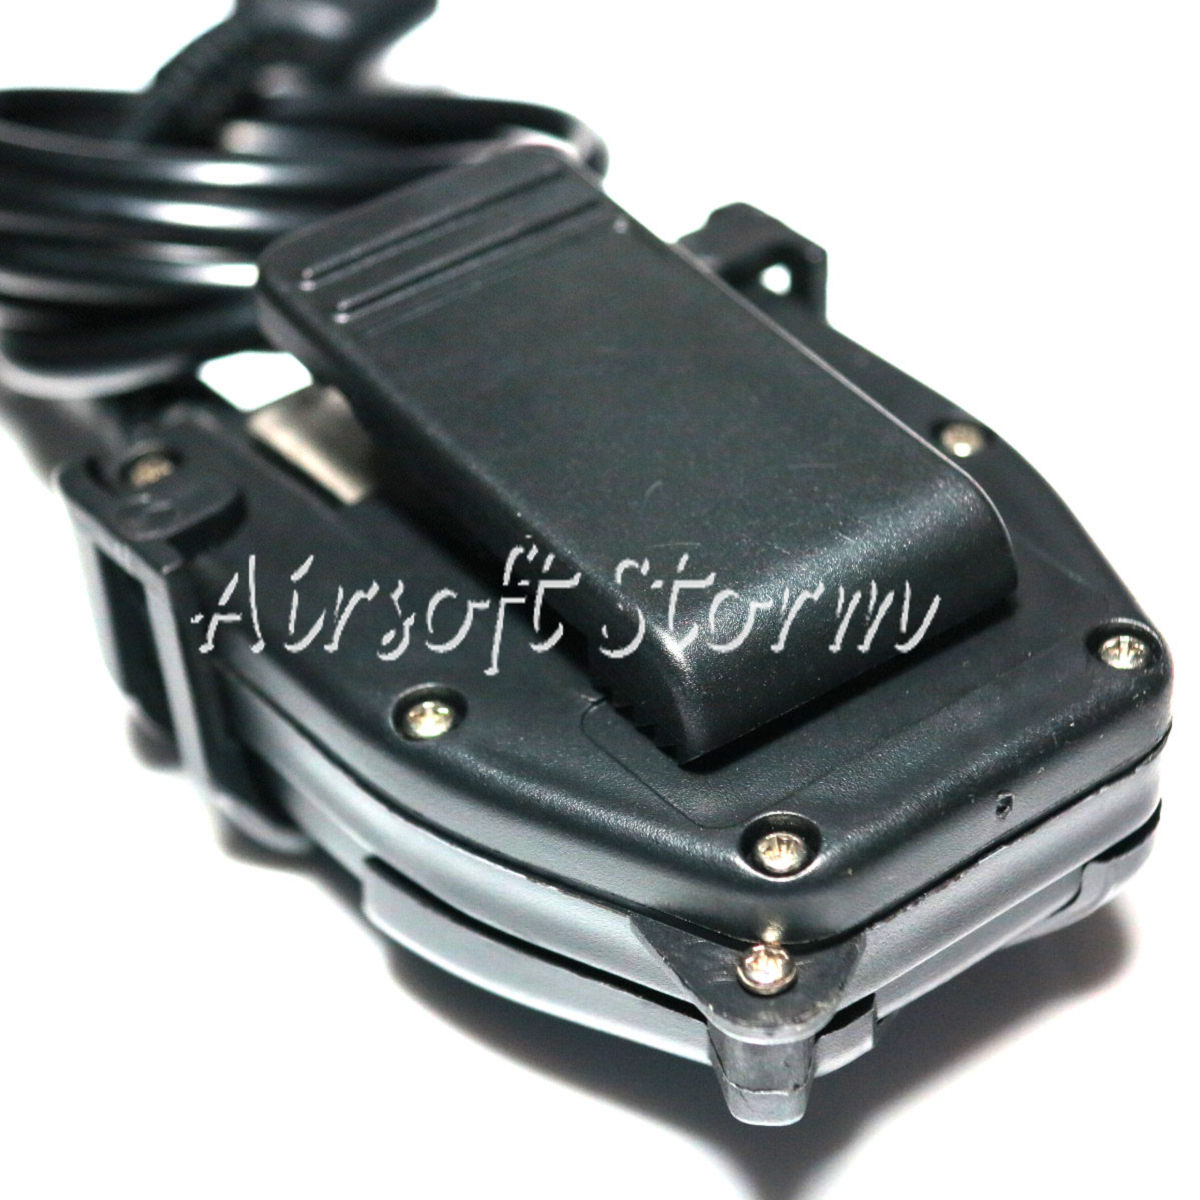 Airsoft Gear SWAT Element Peltor Headset PTT for ICOM 2 Pin Radio